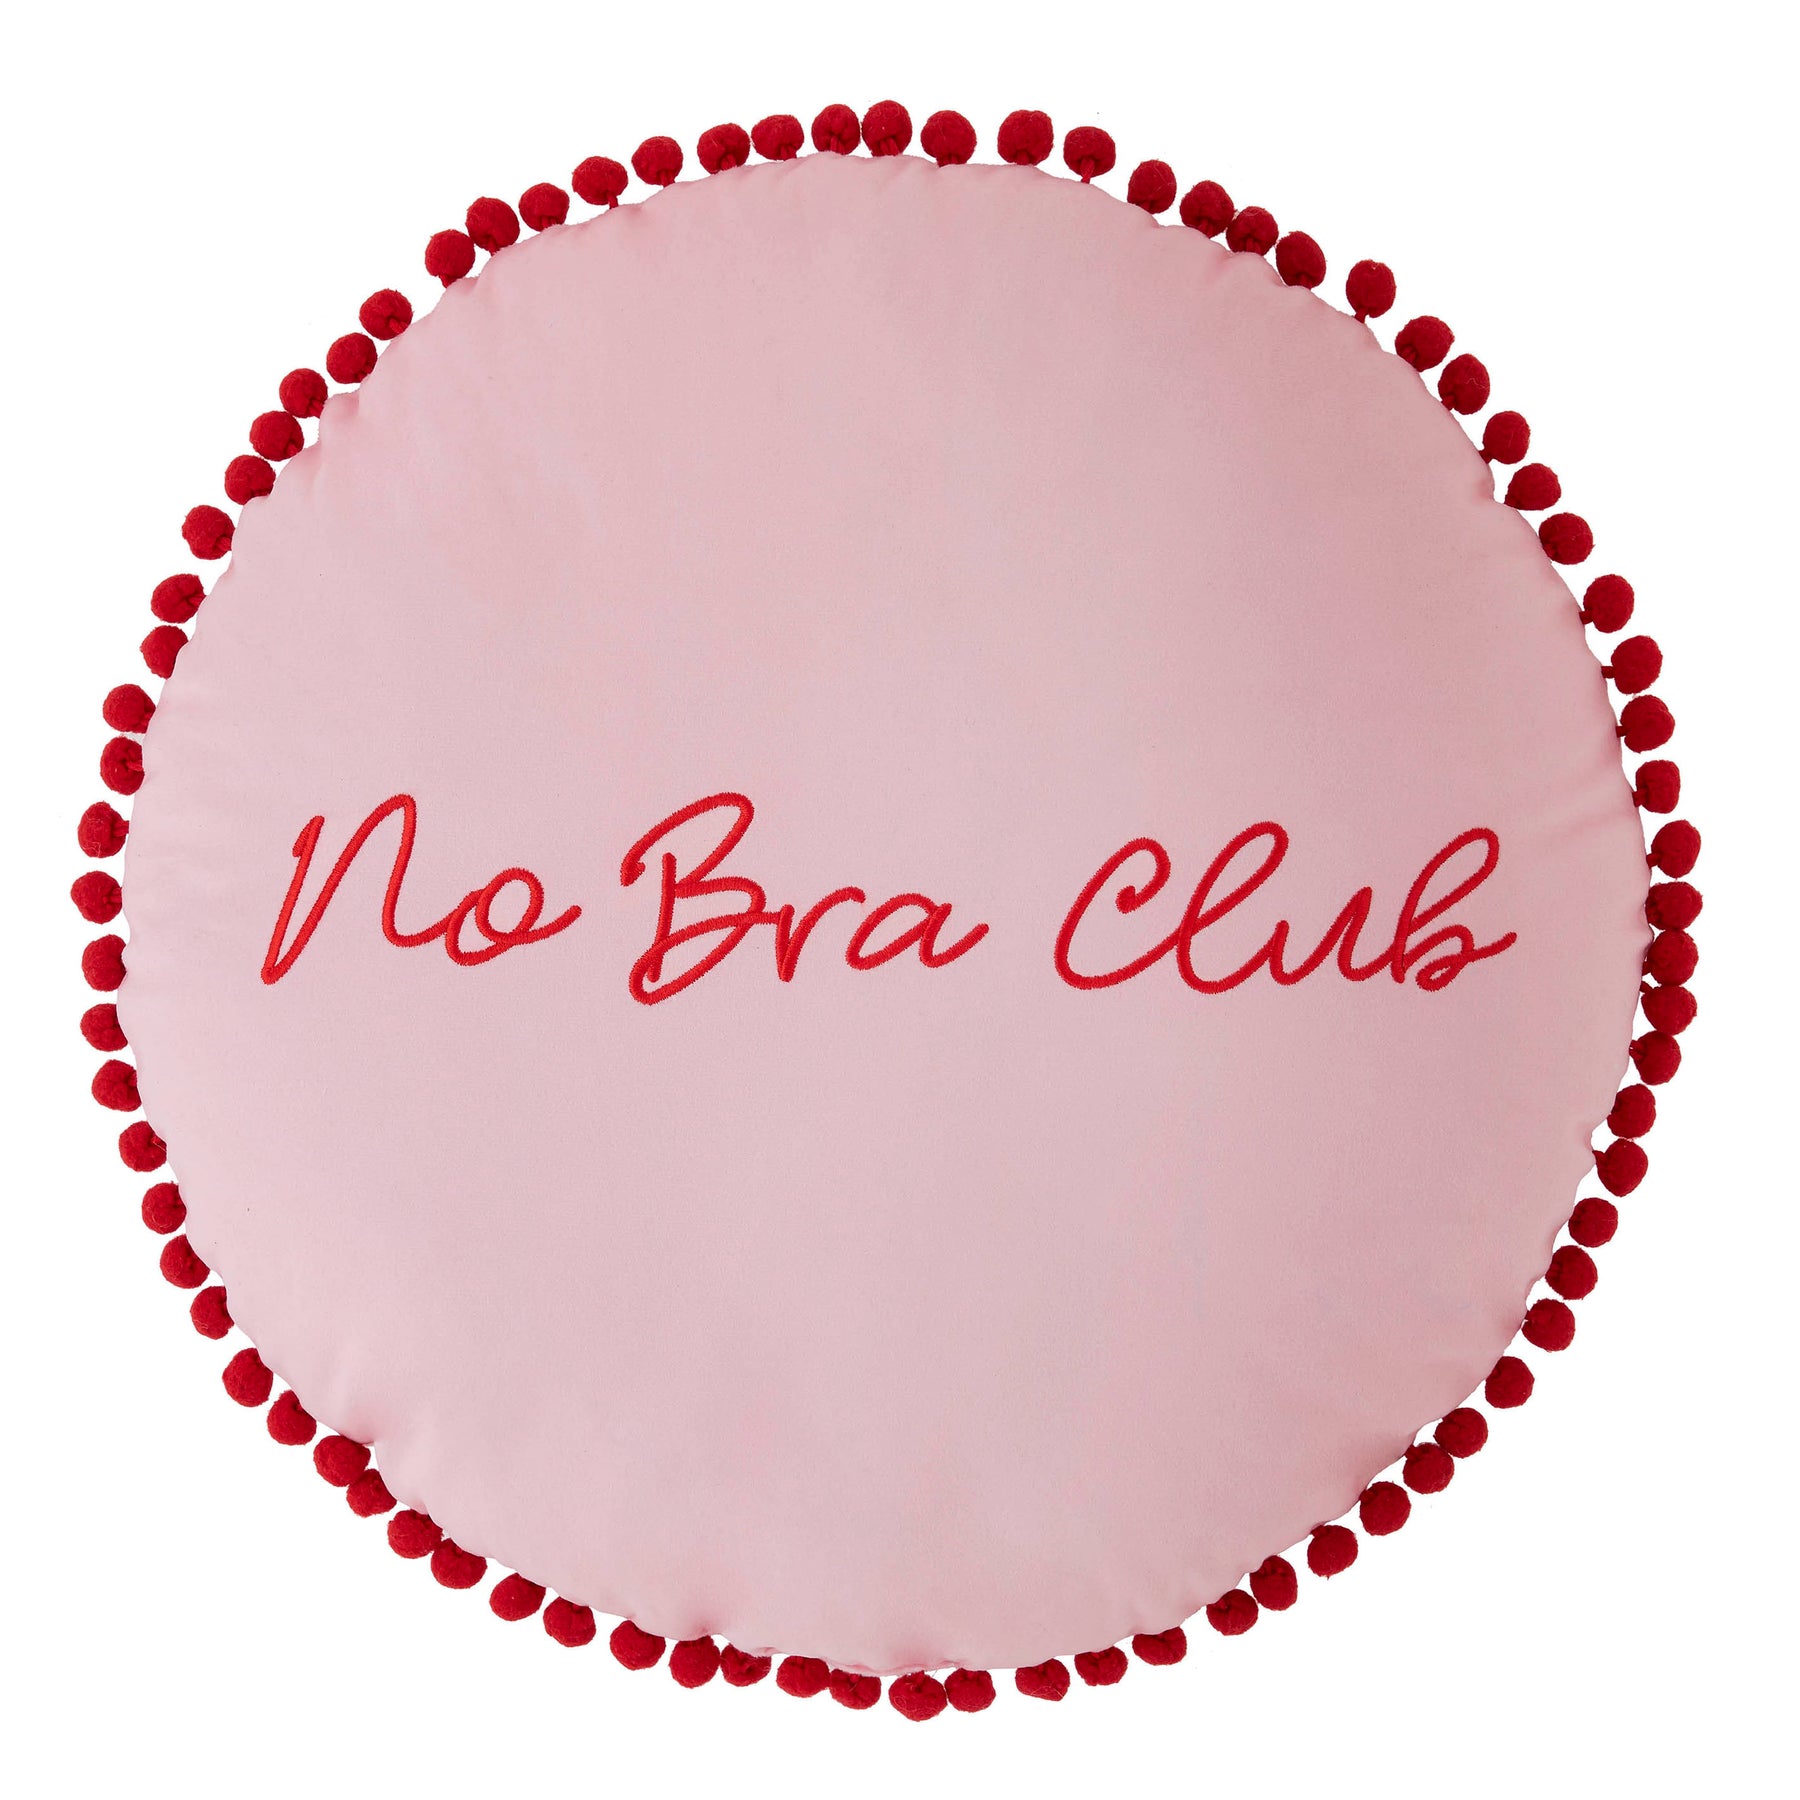 Skinnydip No Bra Club Round Filled Cushion 40cm Pink